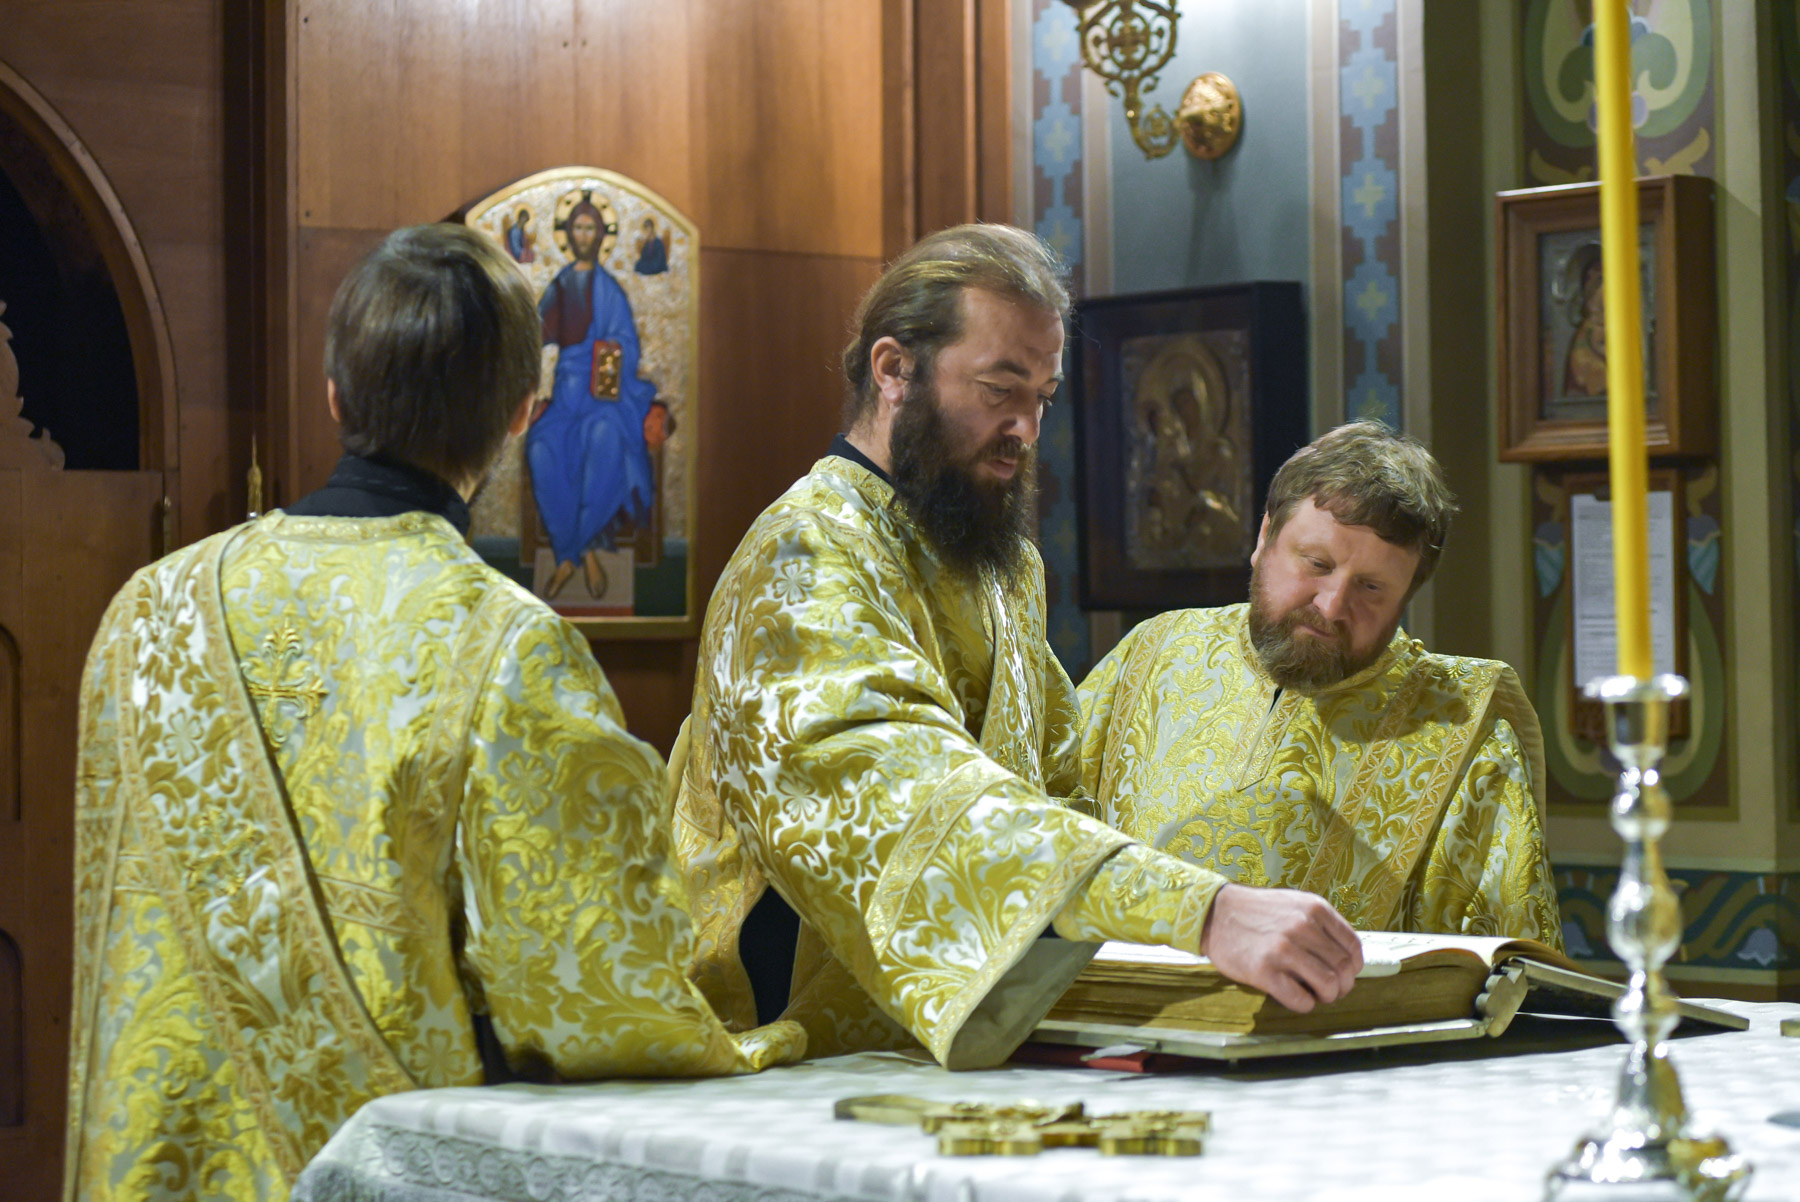 photos of orthodox christmas 0141